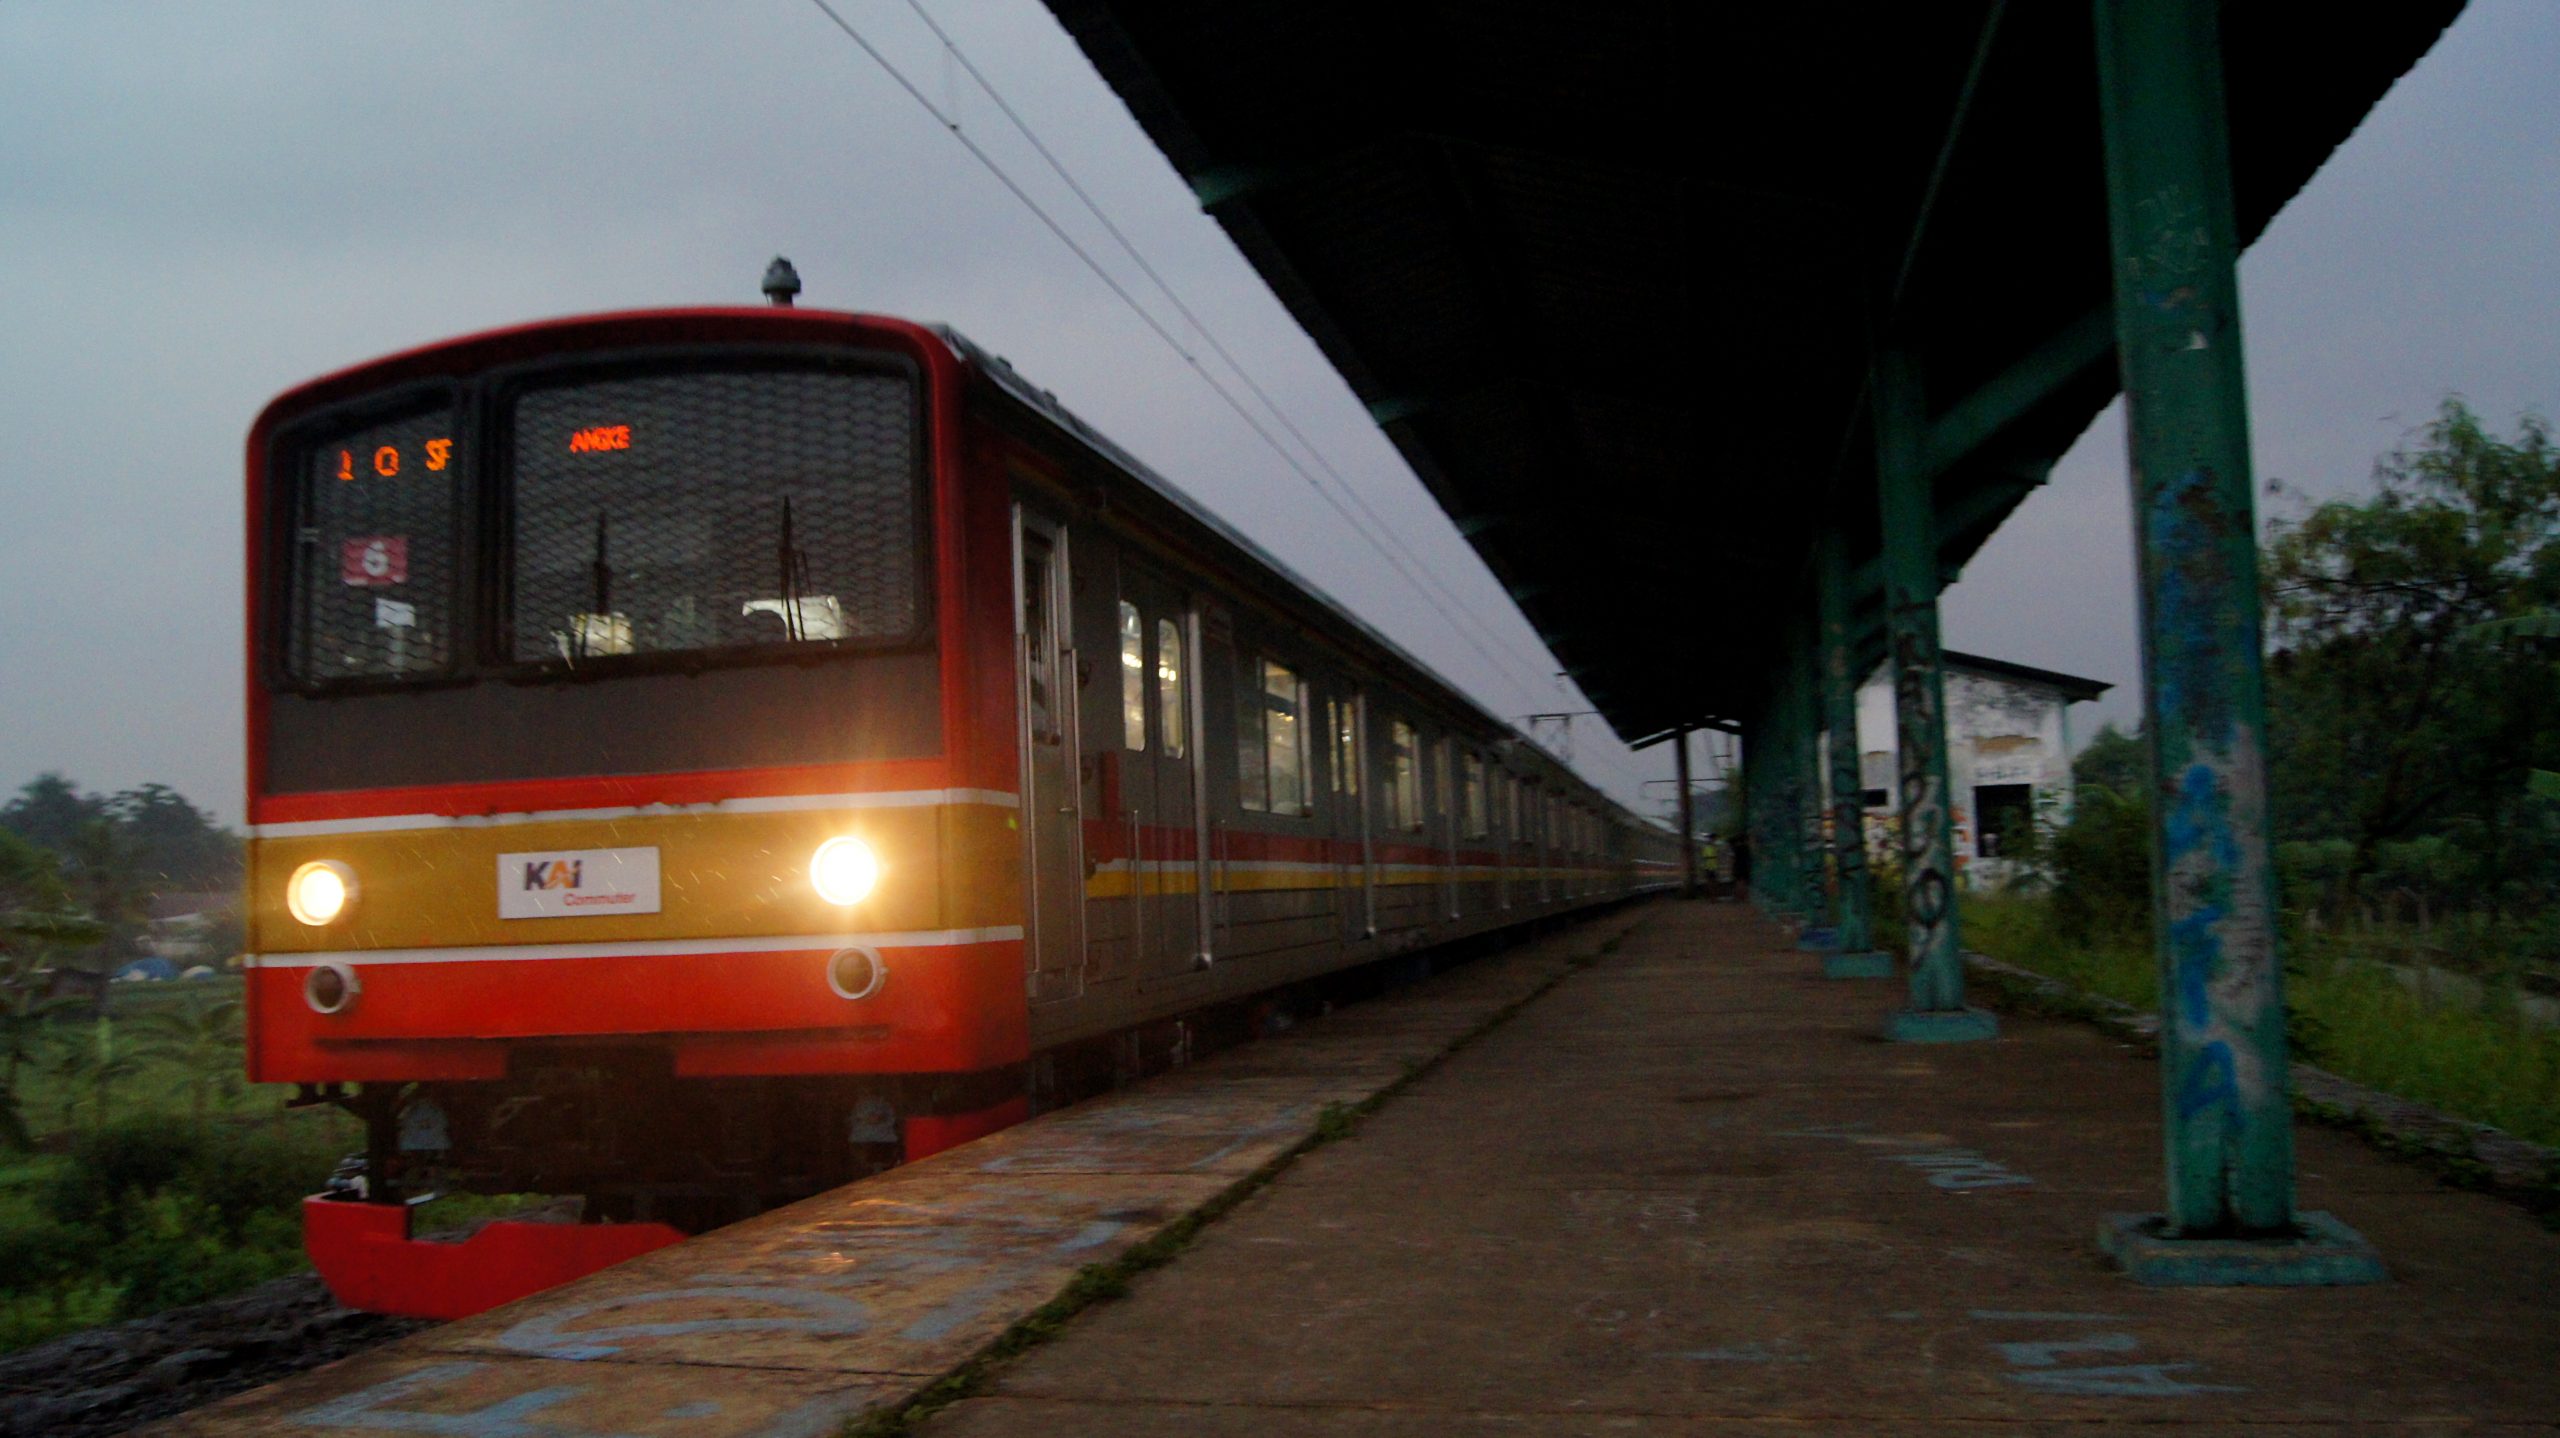 KRL Stasiun Pondok Rajeg